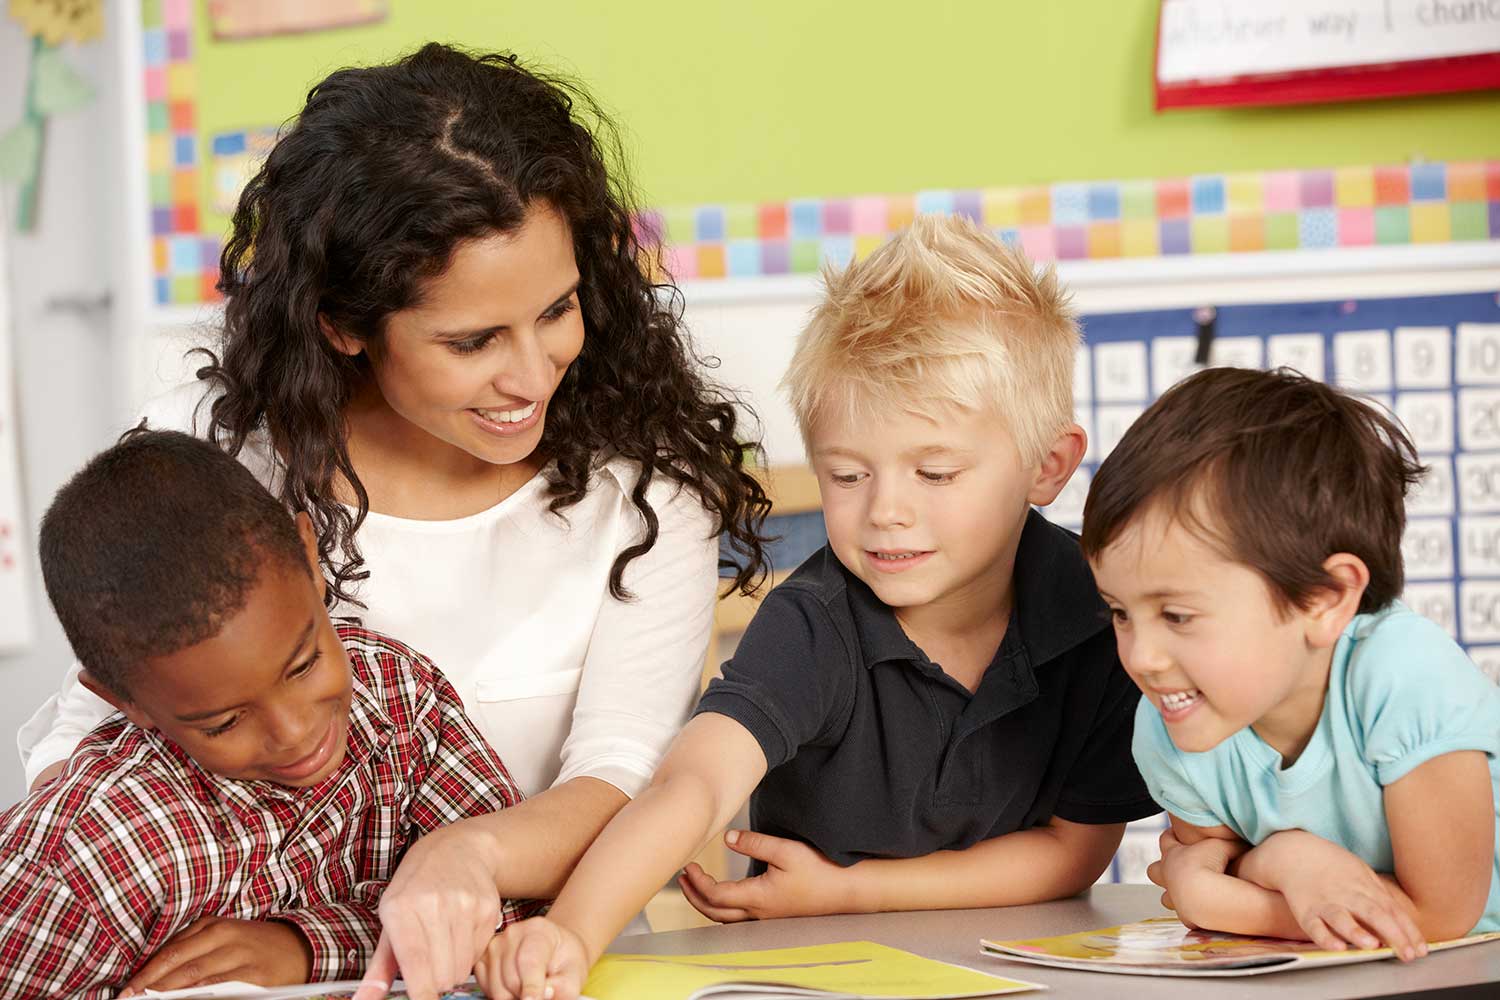 Preschool teacher with three kids working on day care activity